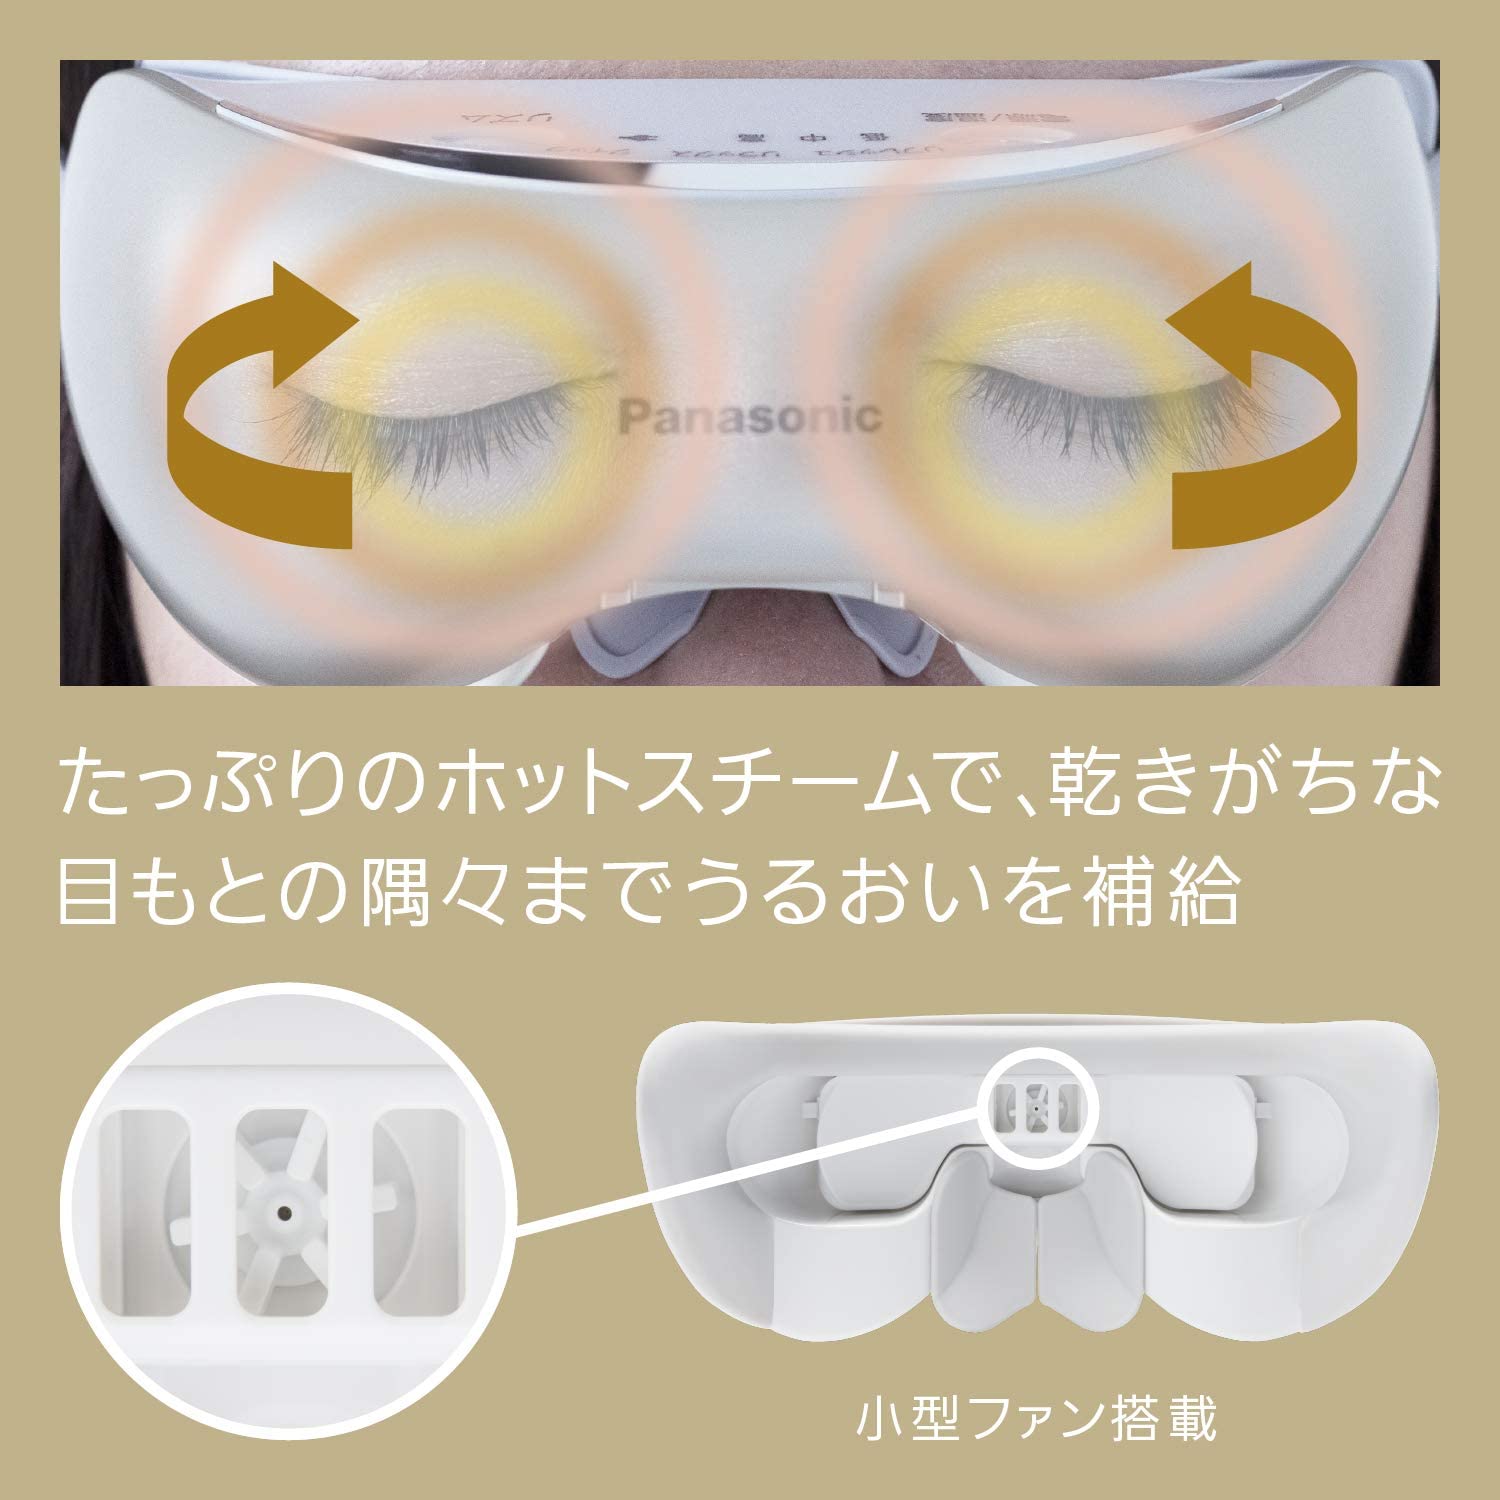 Panasonic Eye Esthetics Overseas Support Gold Style EH-SW68-N 